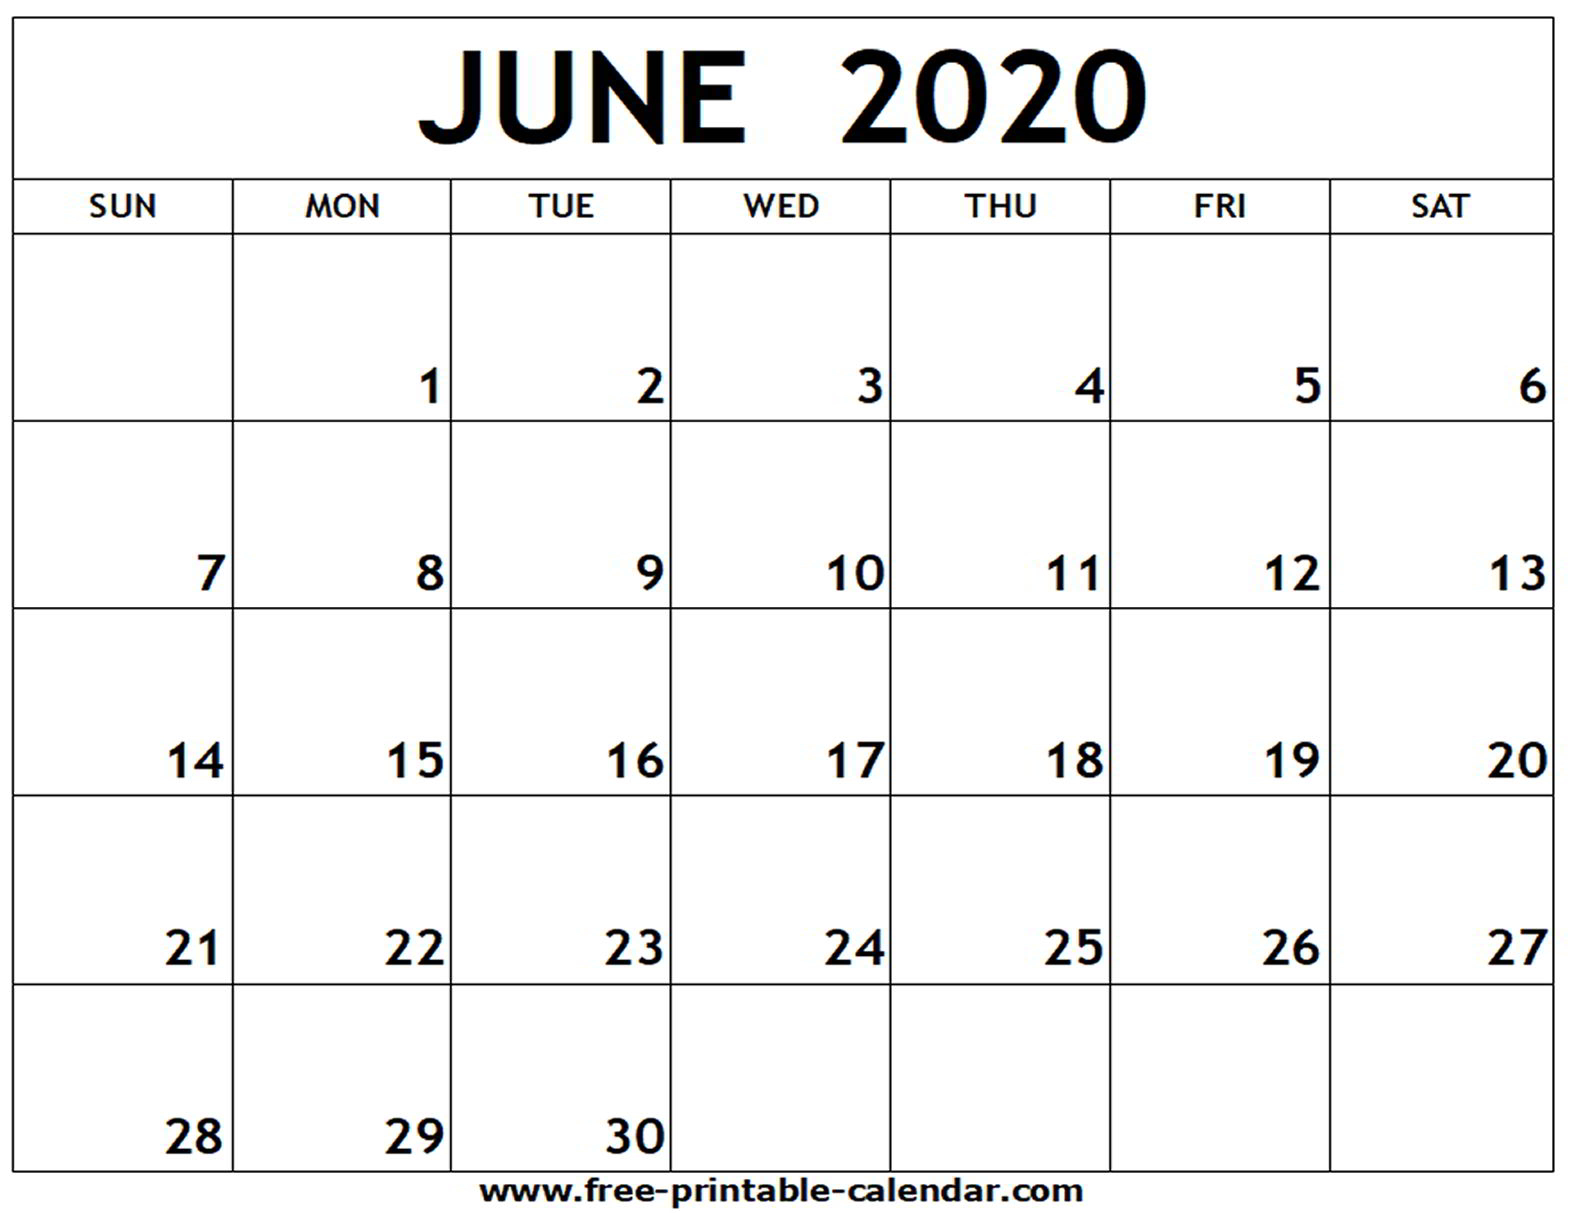 Free Calendar June 2020 - Wpa.wpart.co